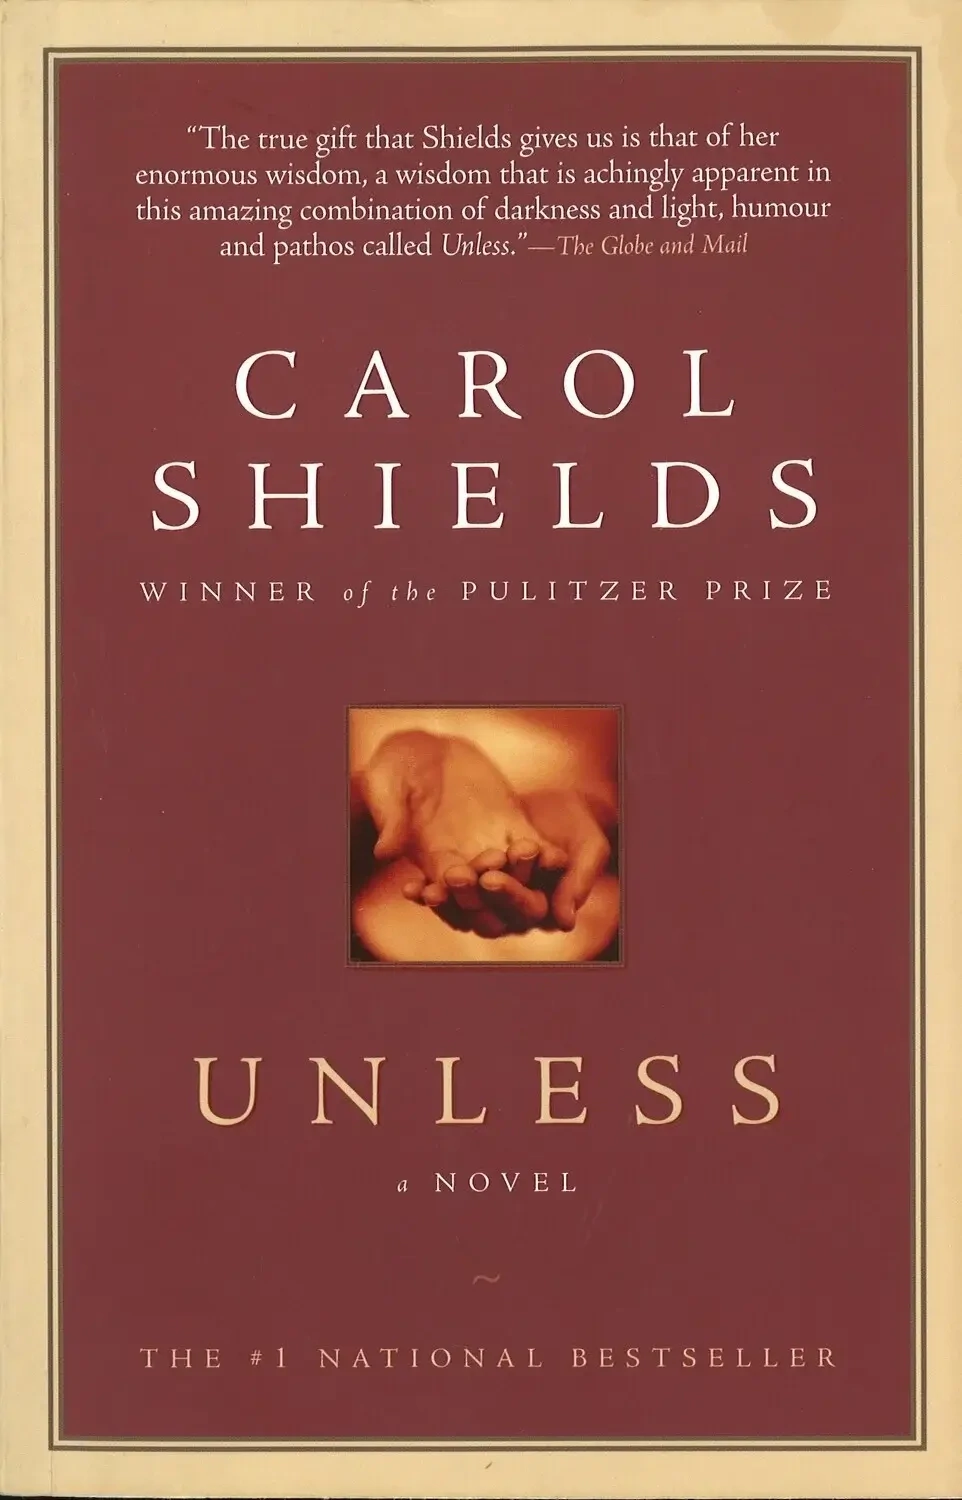 Unless by Carol Shields